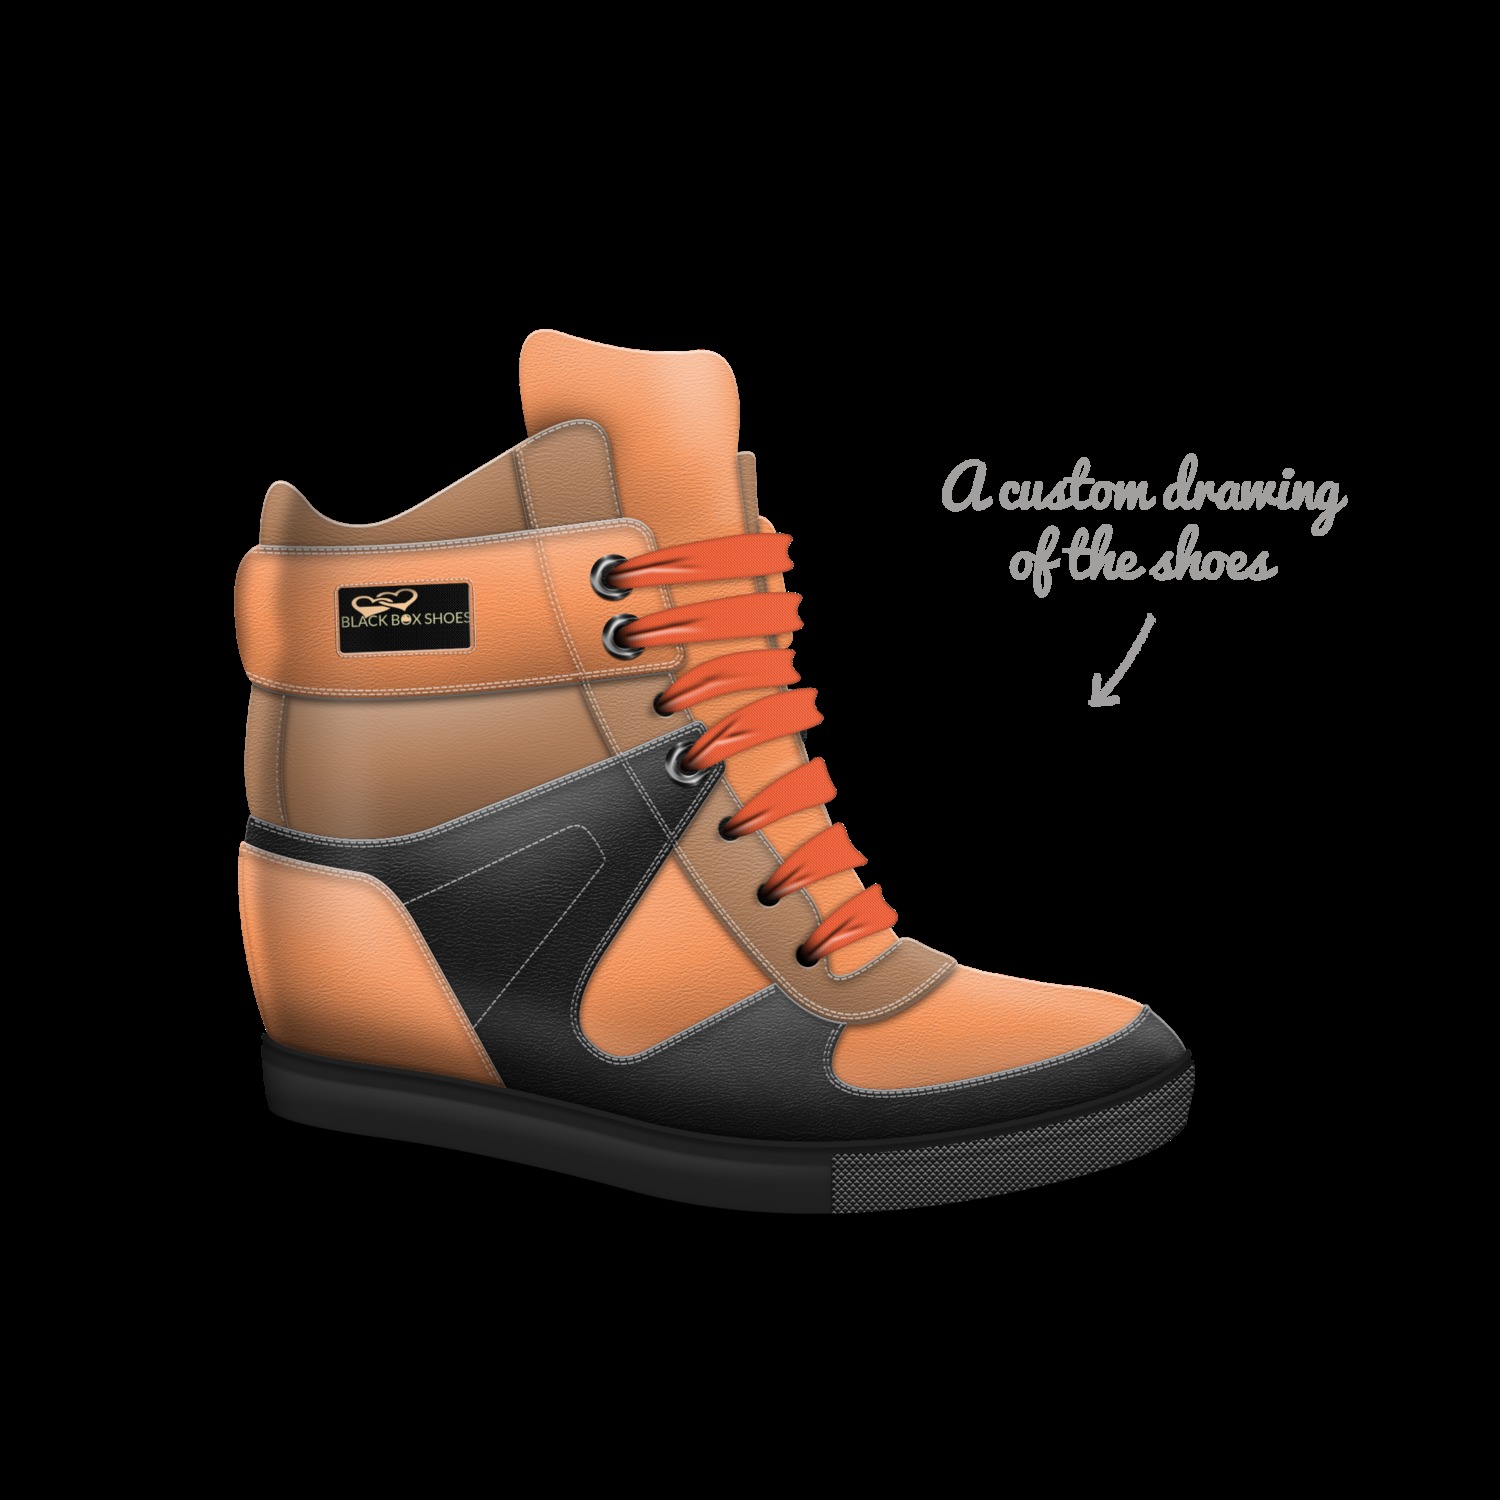 Black box shoes | A Custom Shoe concept 